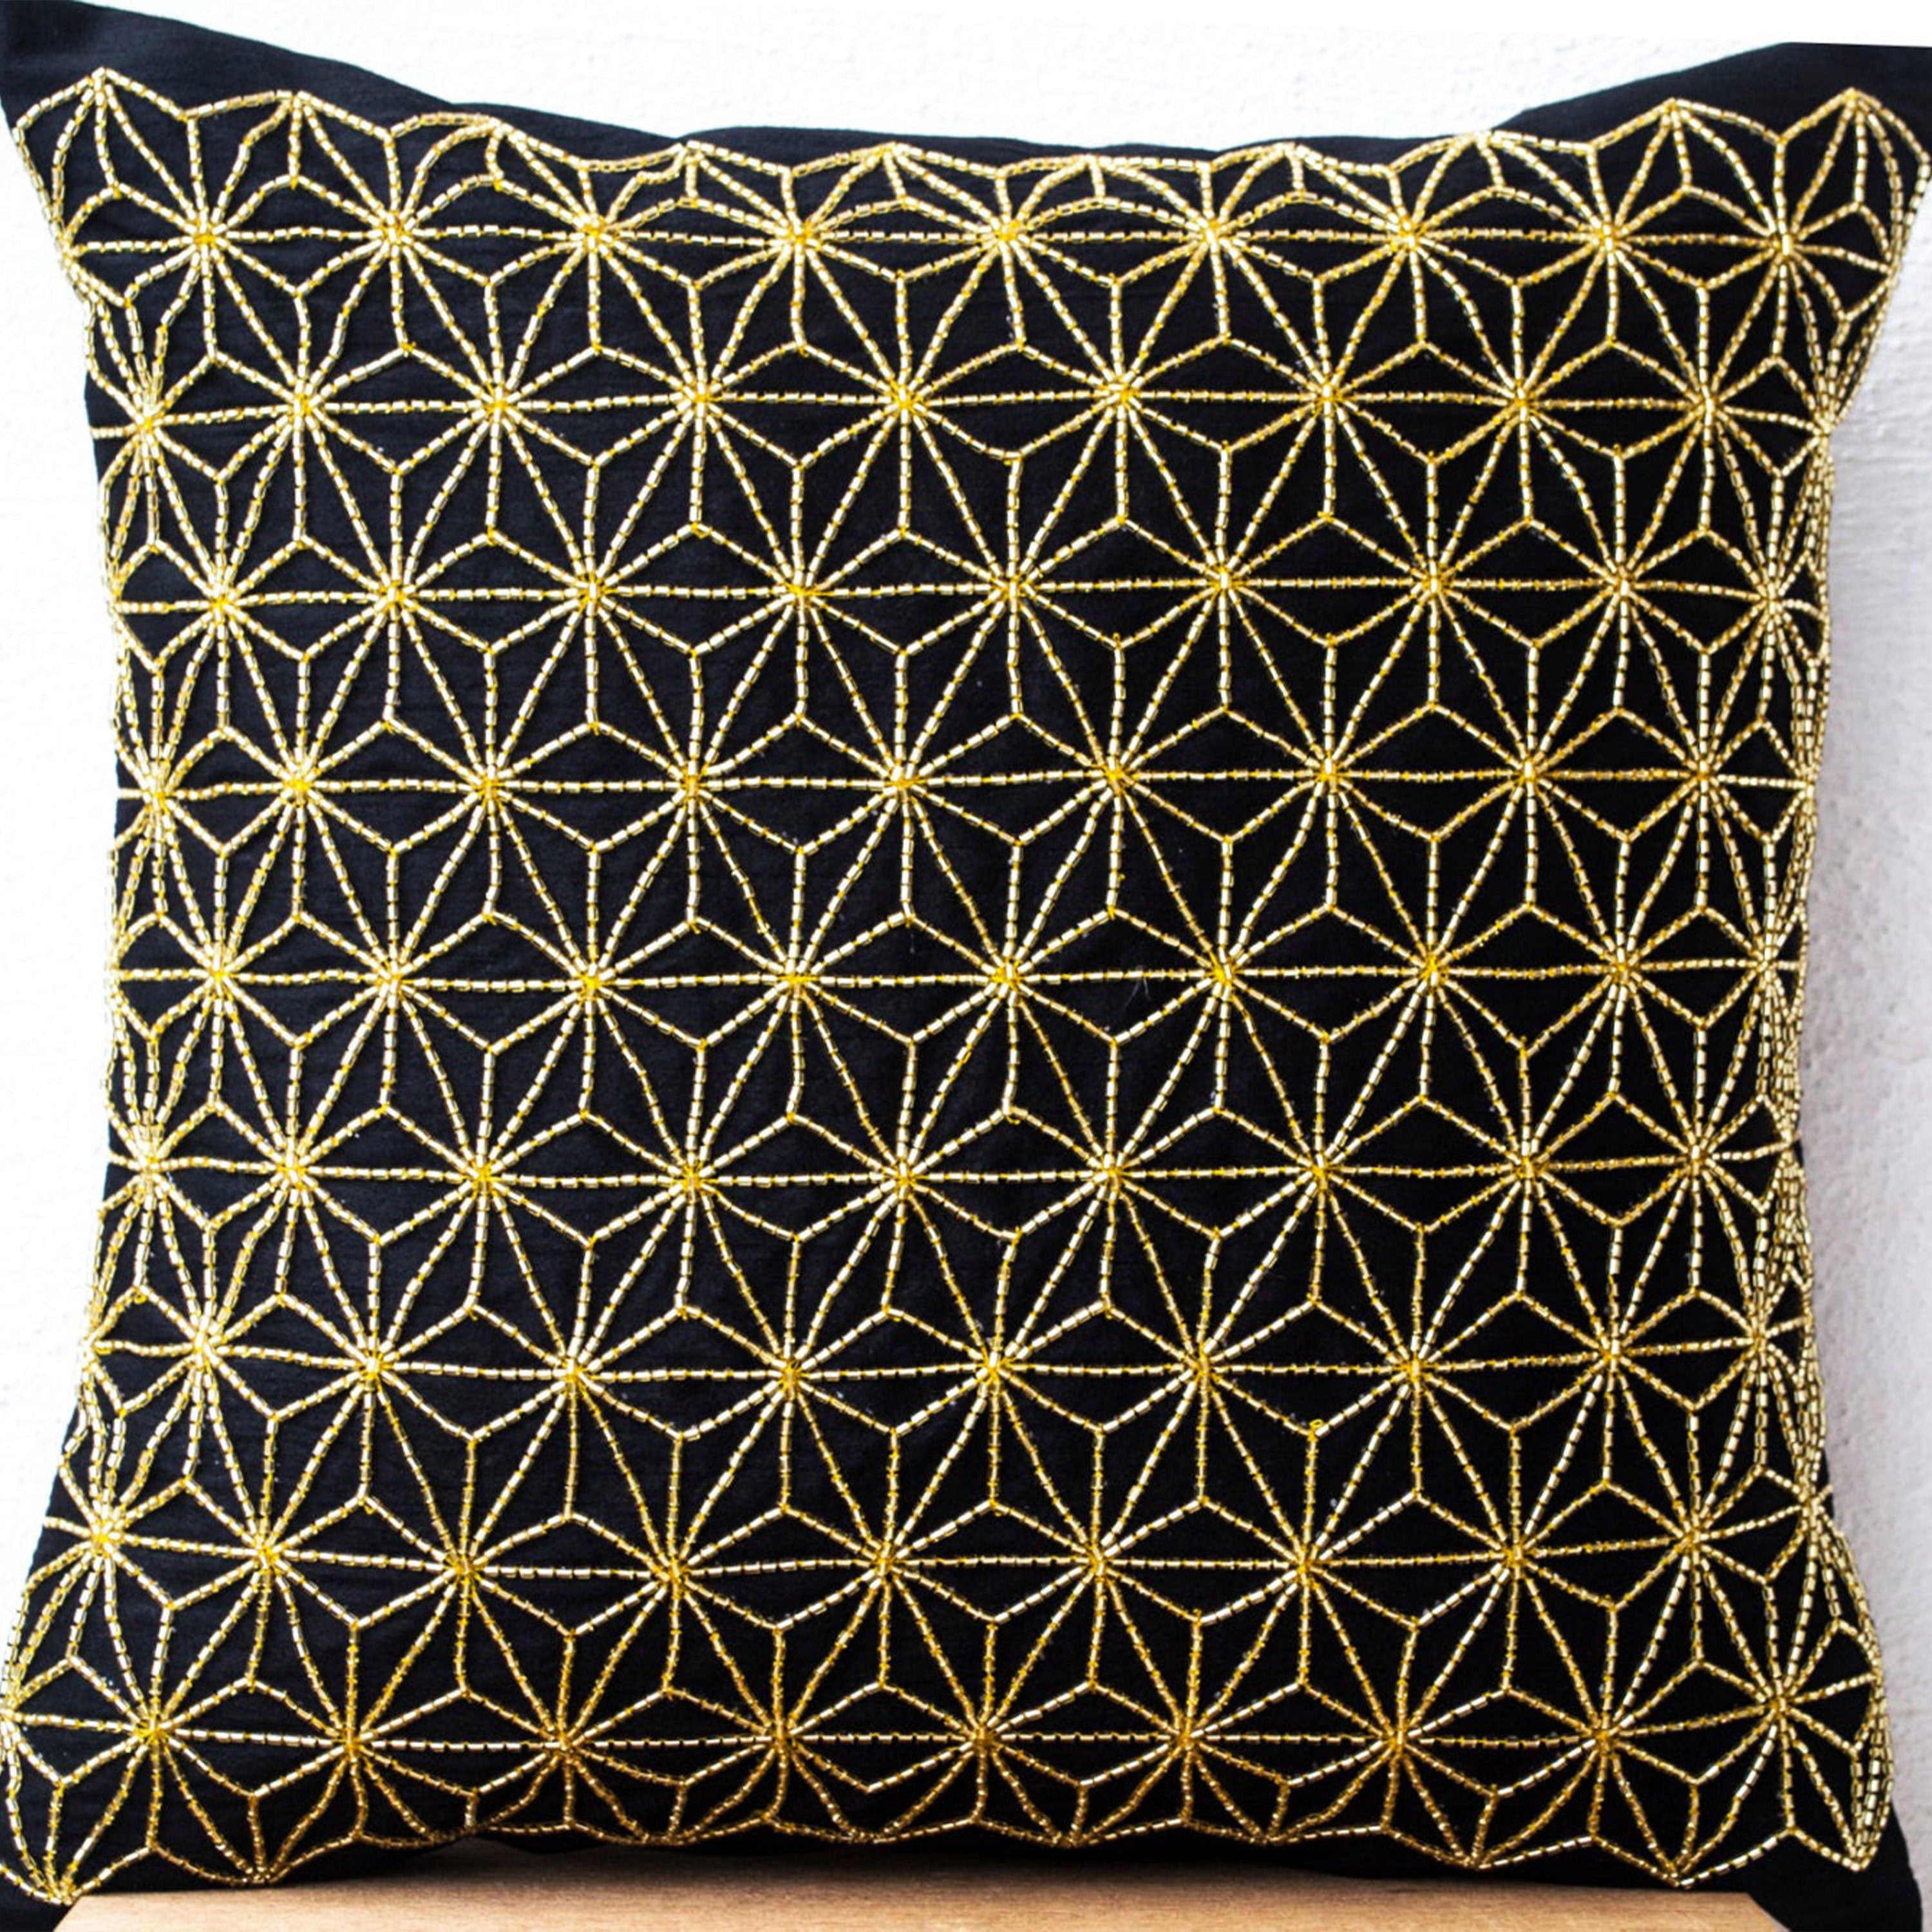 Gold Hemp Leaf Embroidery Sashiko Pillow Case On Black Faux Silk Designer Cushion